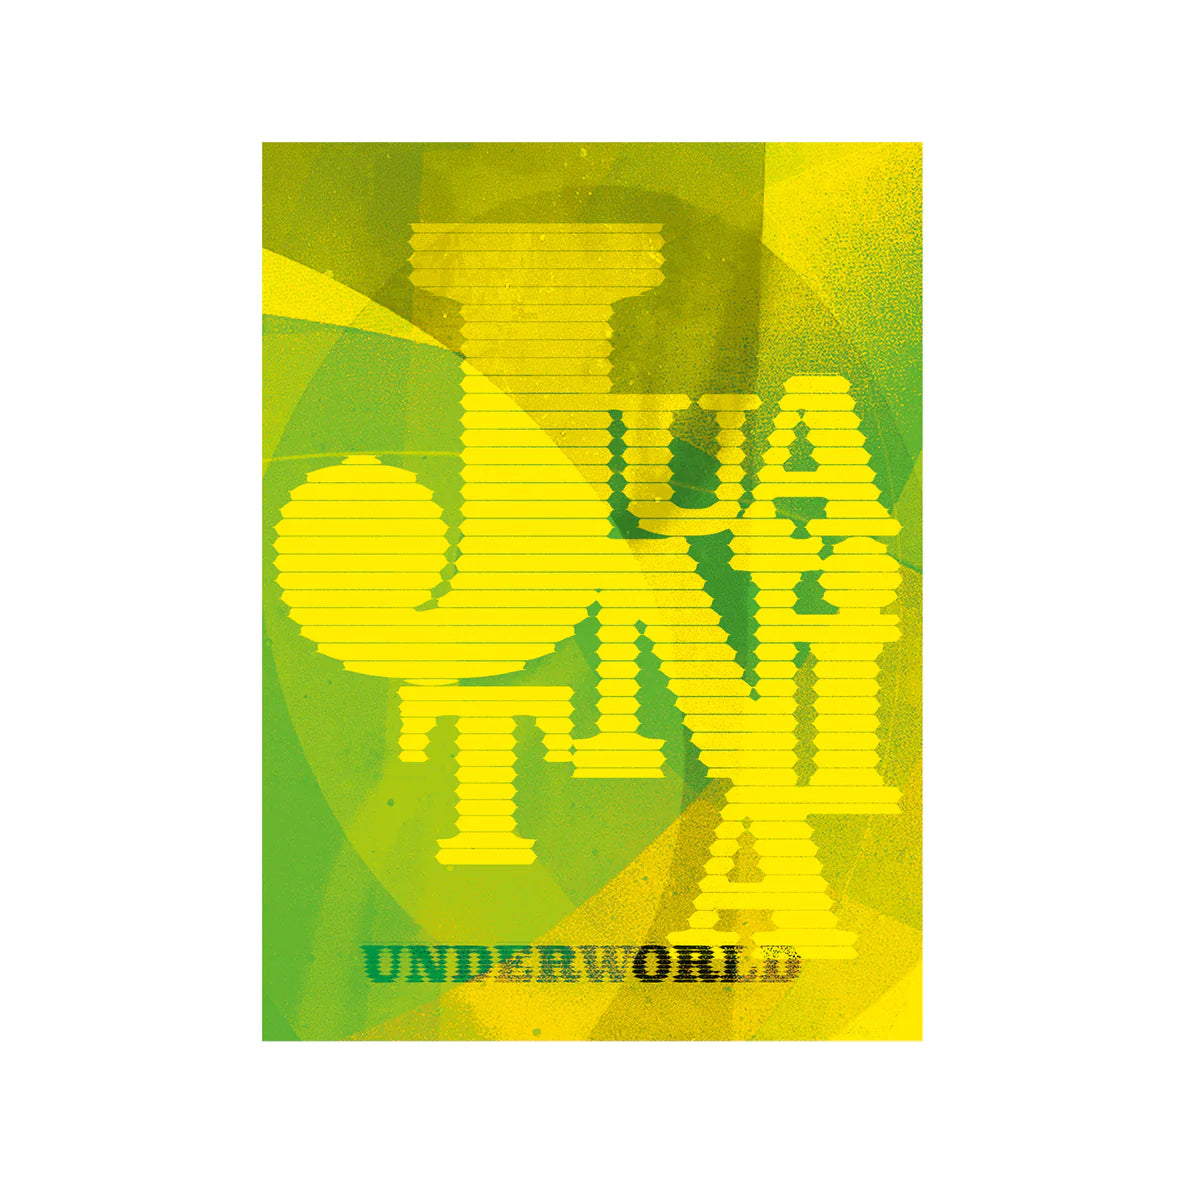 Underworld - *Juanita Limited Drop* Juanita A2 Lithograph - Signed By Rick And Karl